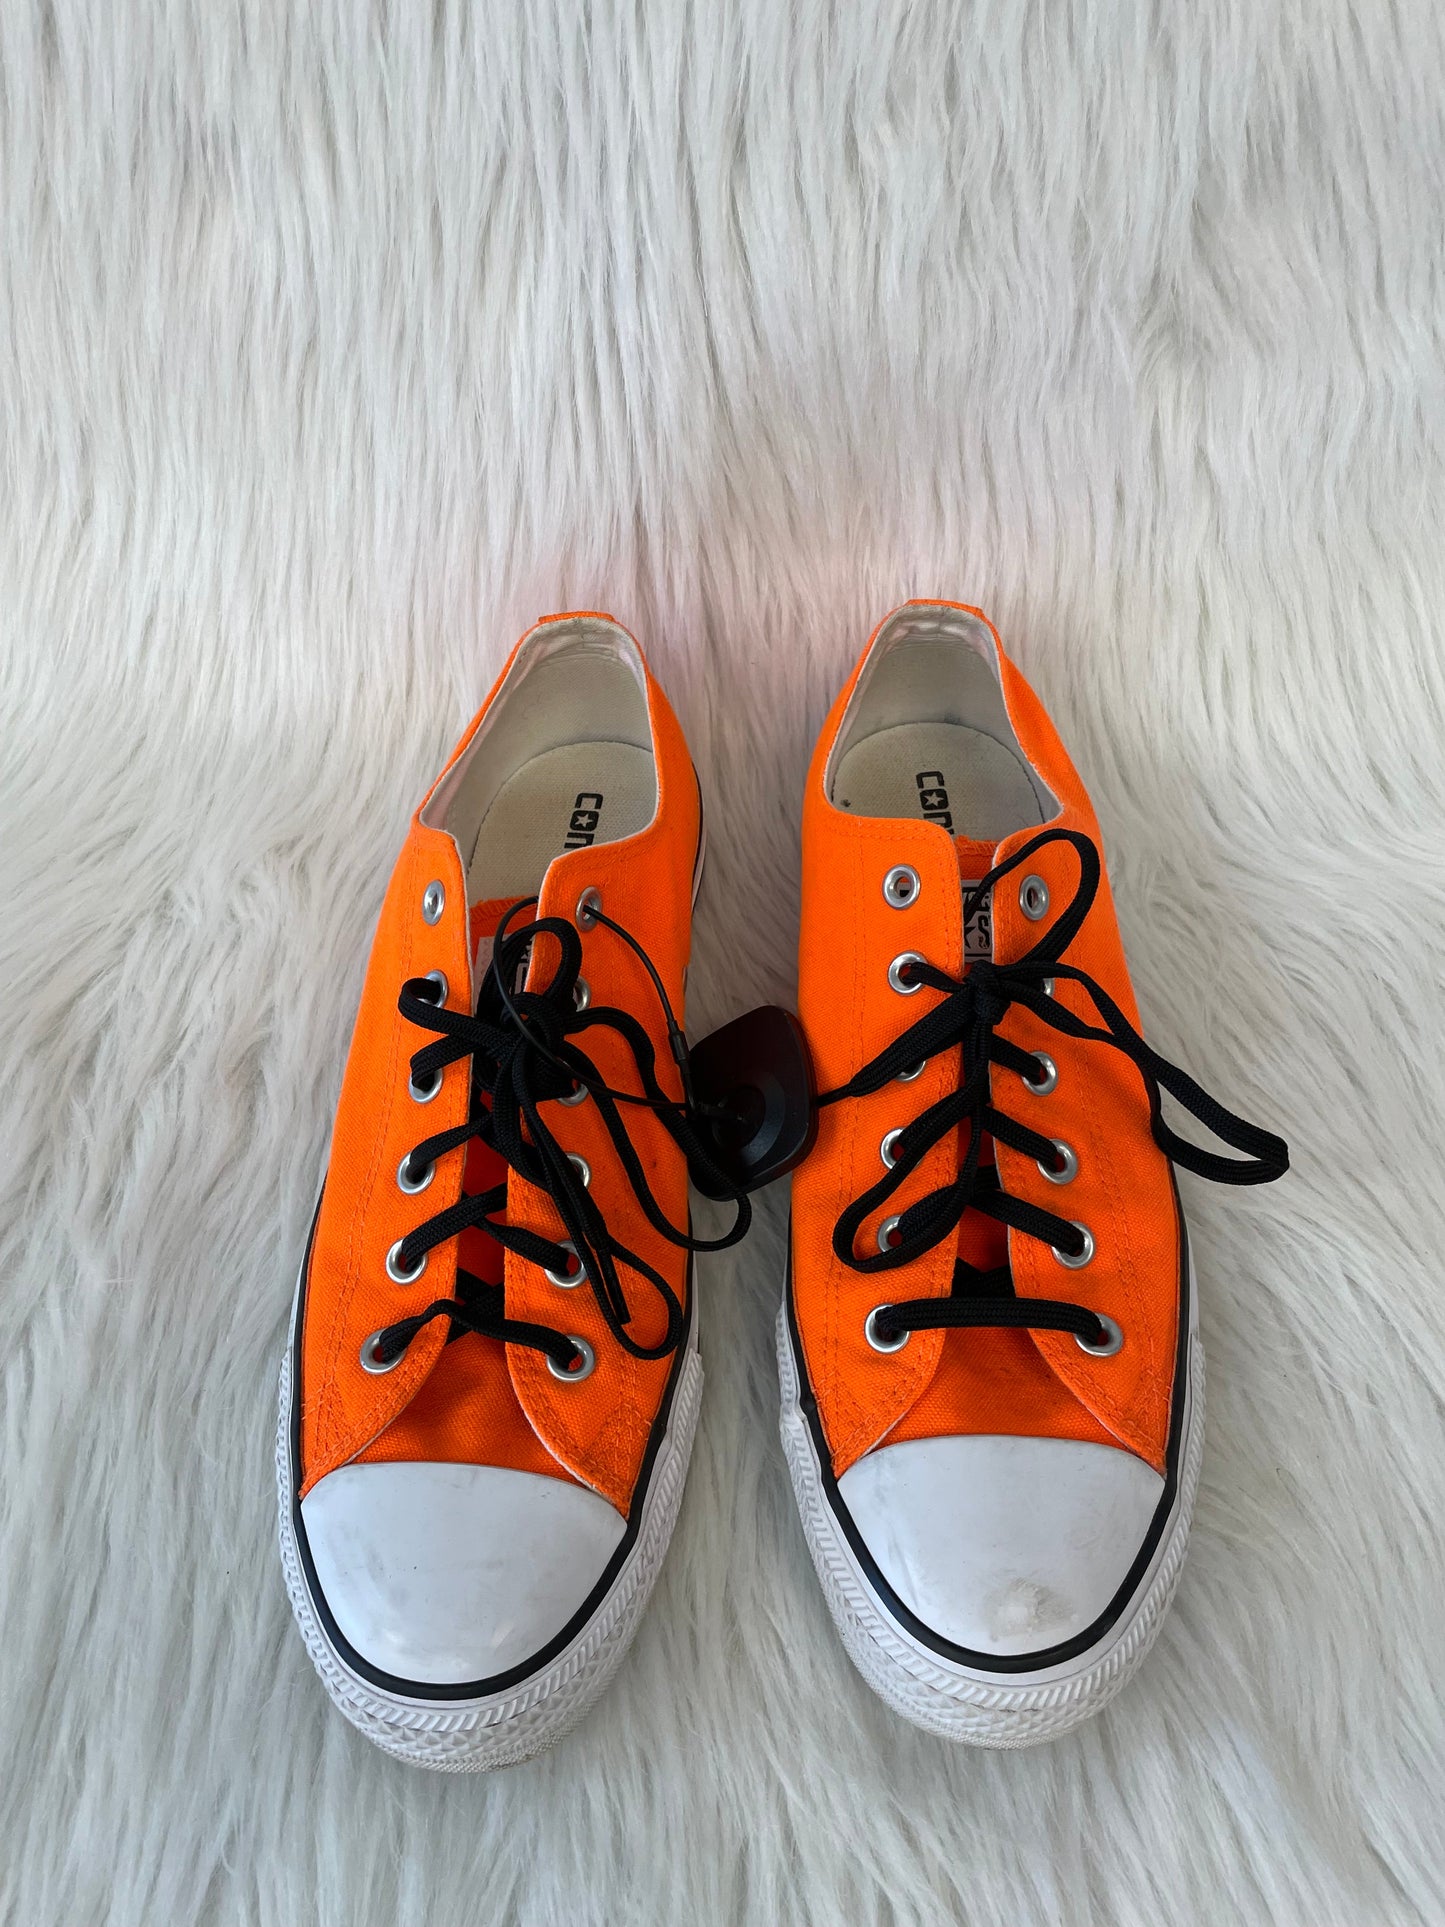 Black & Orange Shoes Sneakers Converse, Size 10